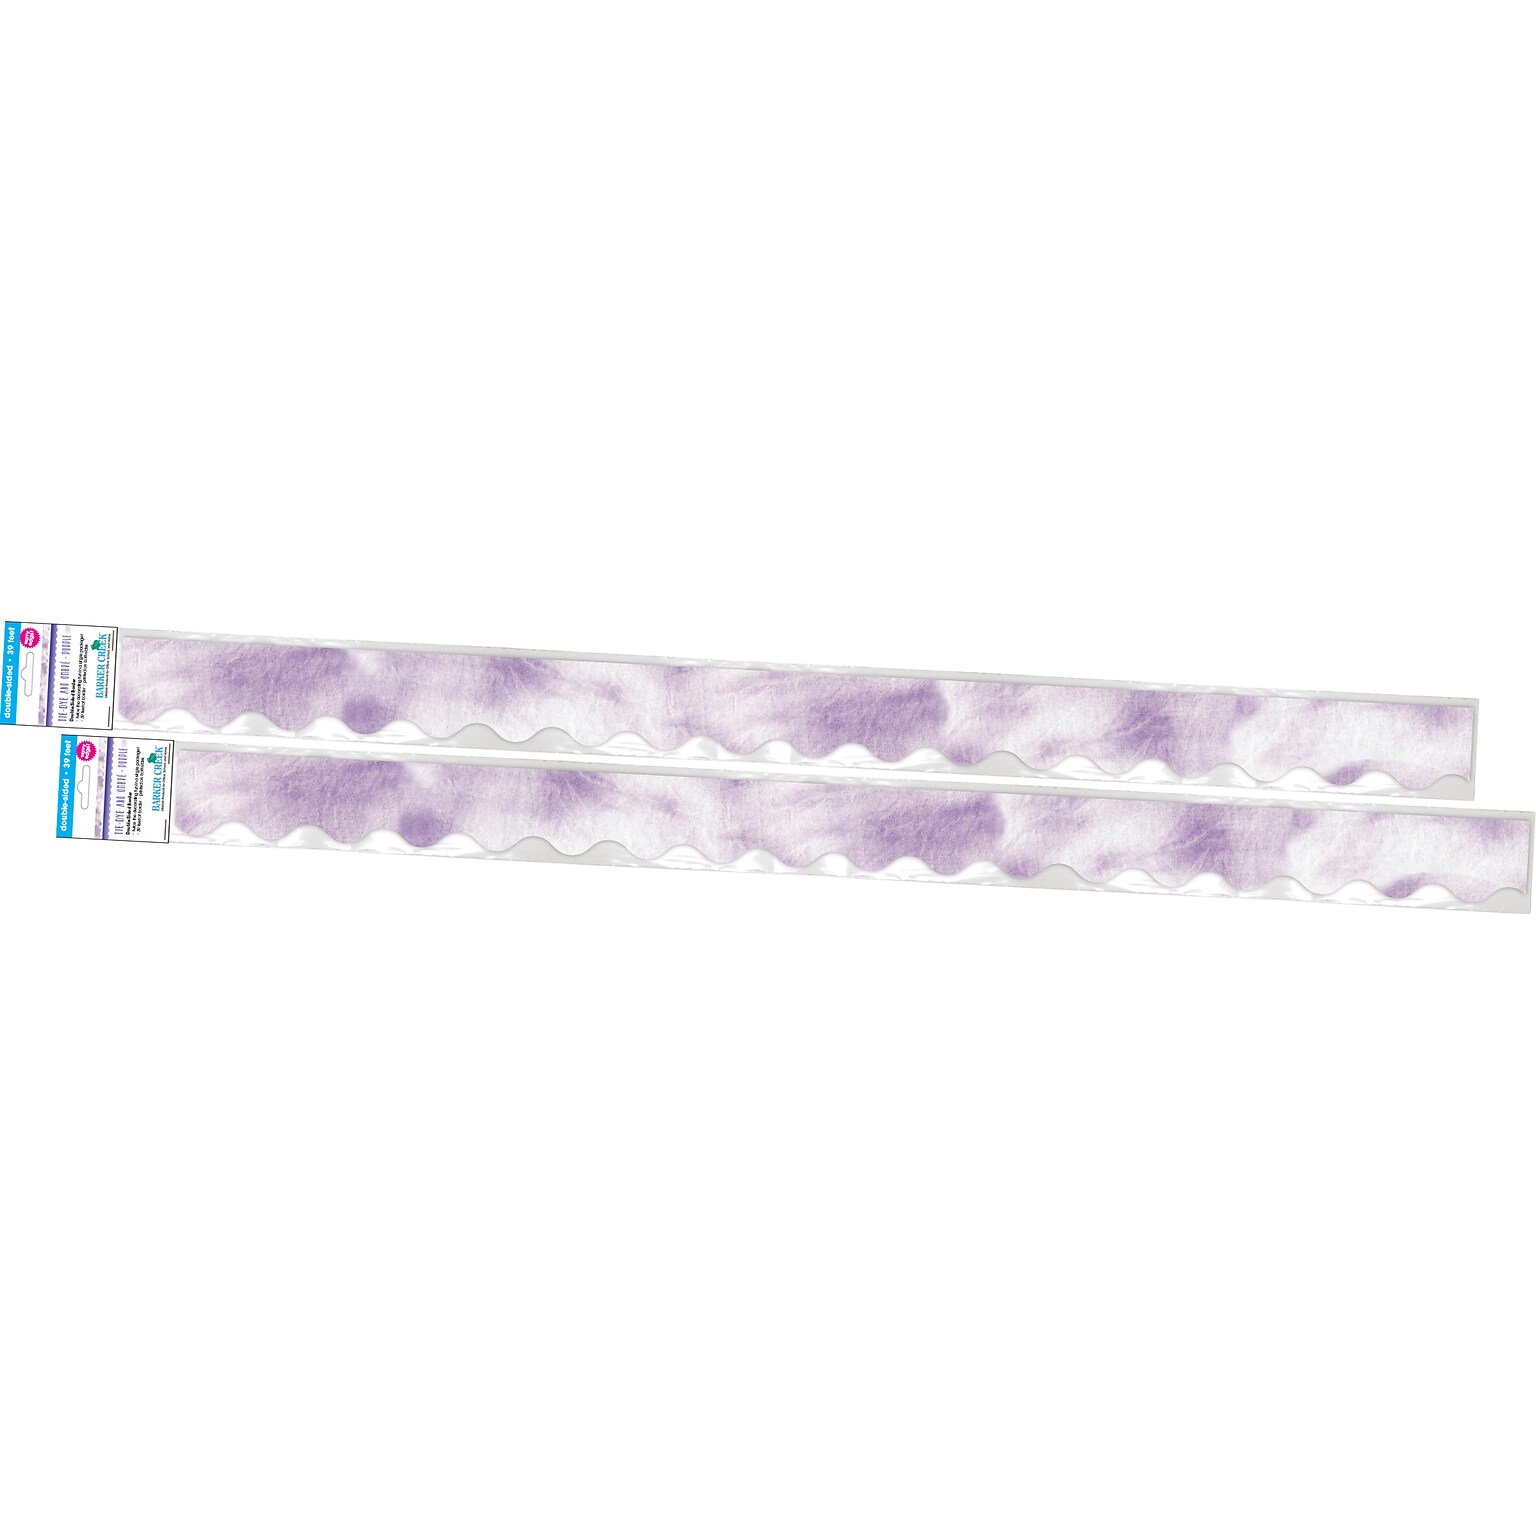 Barker Creek Purple Tie-Dye and Ombré Double-Sided Border, 26/Set (4331)